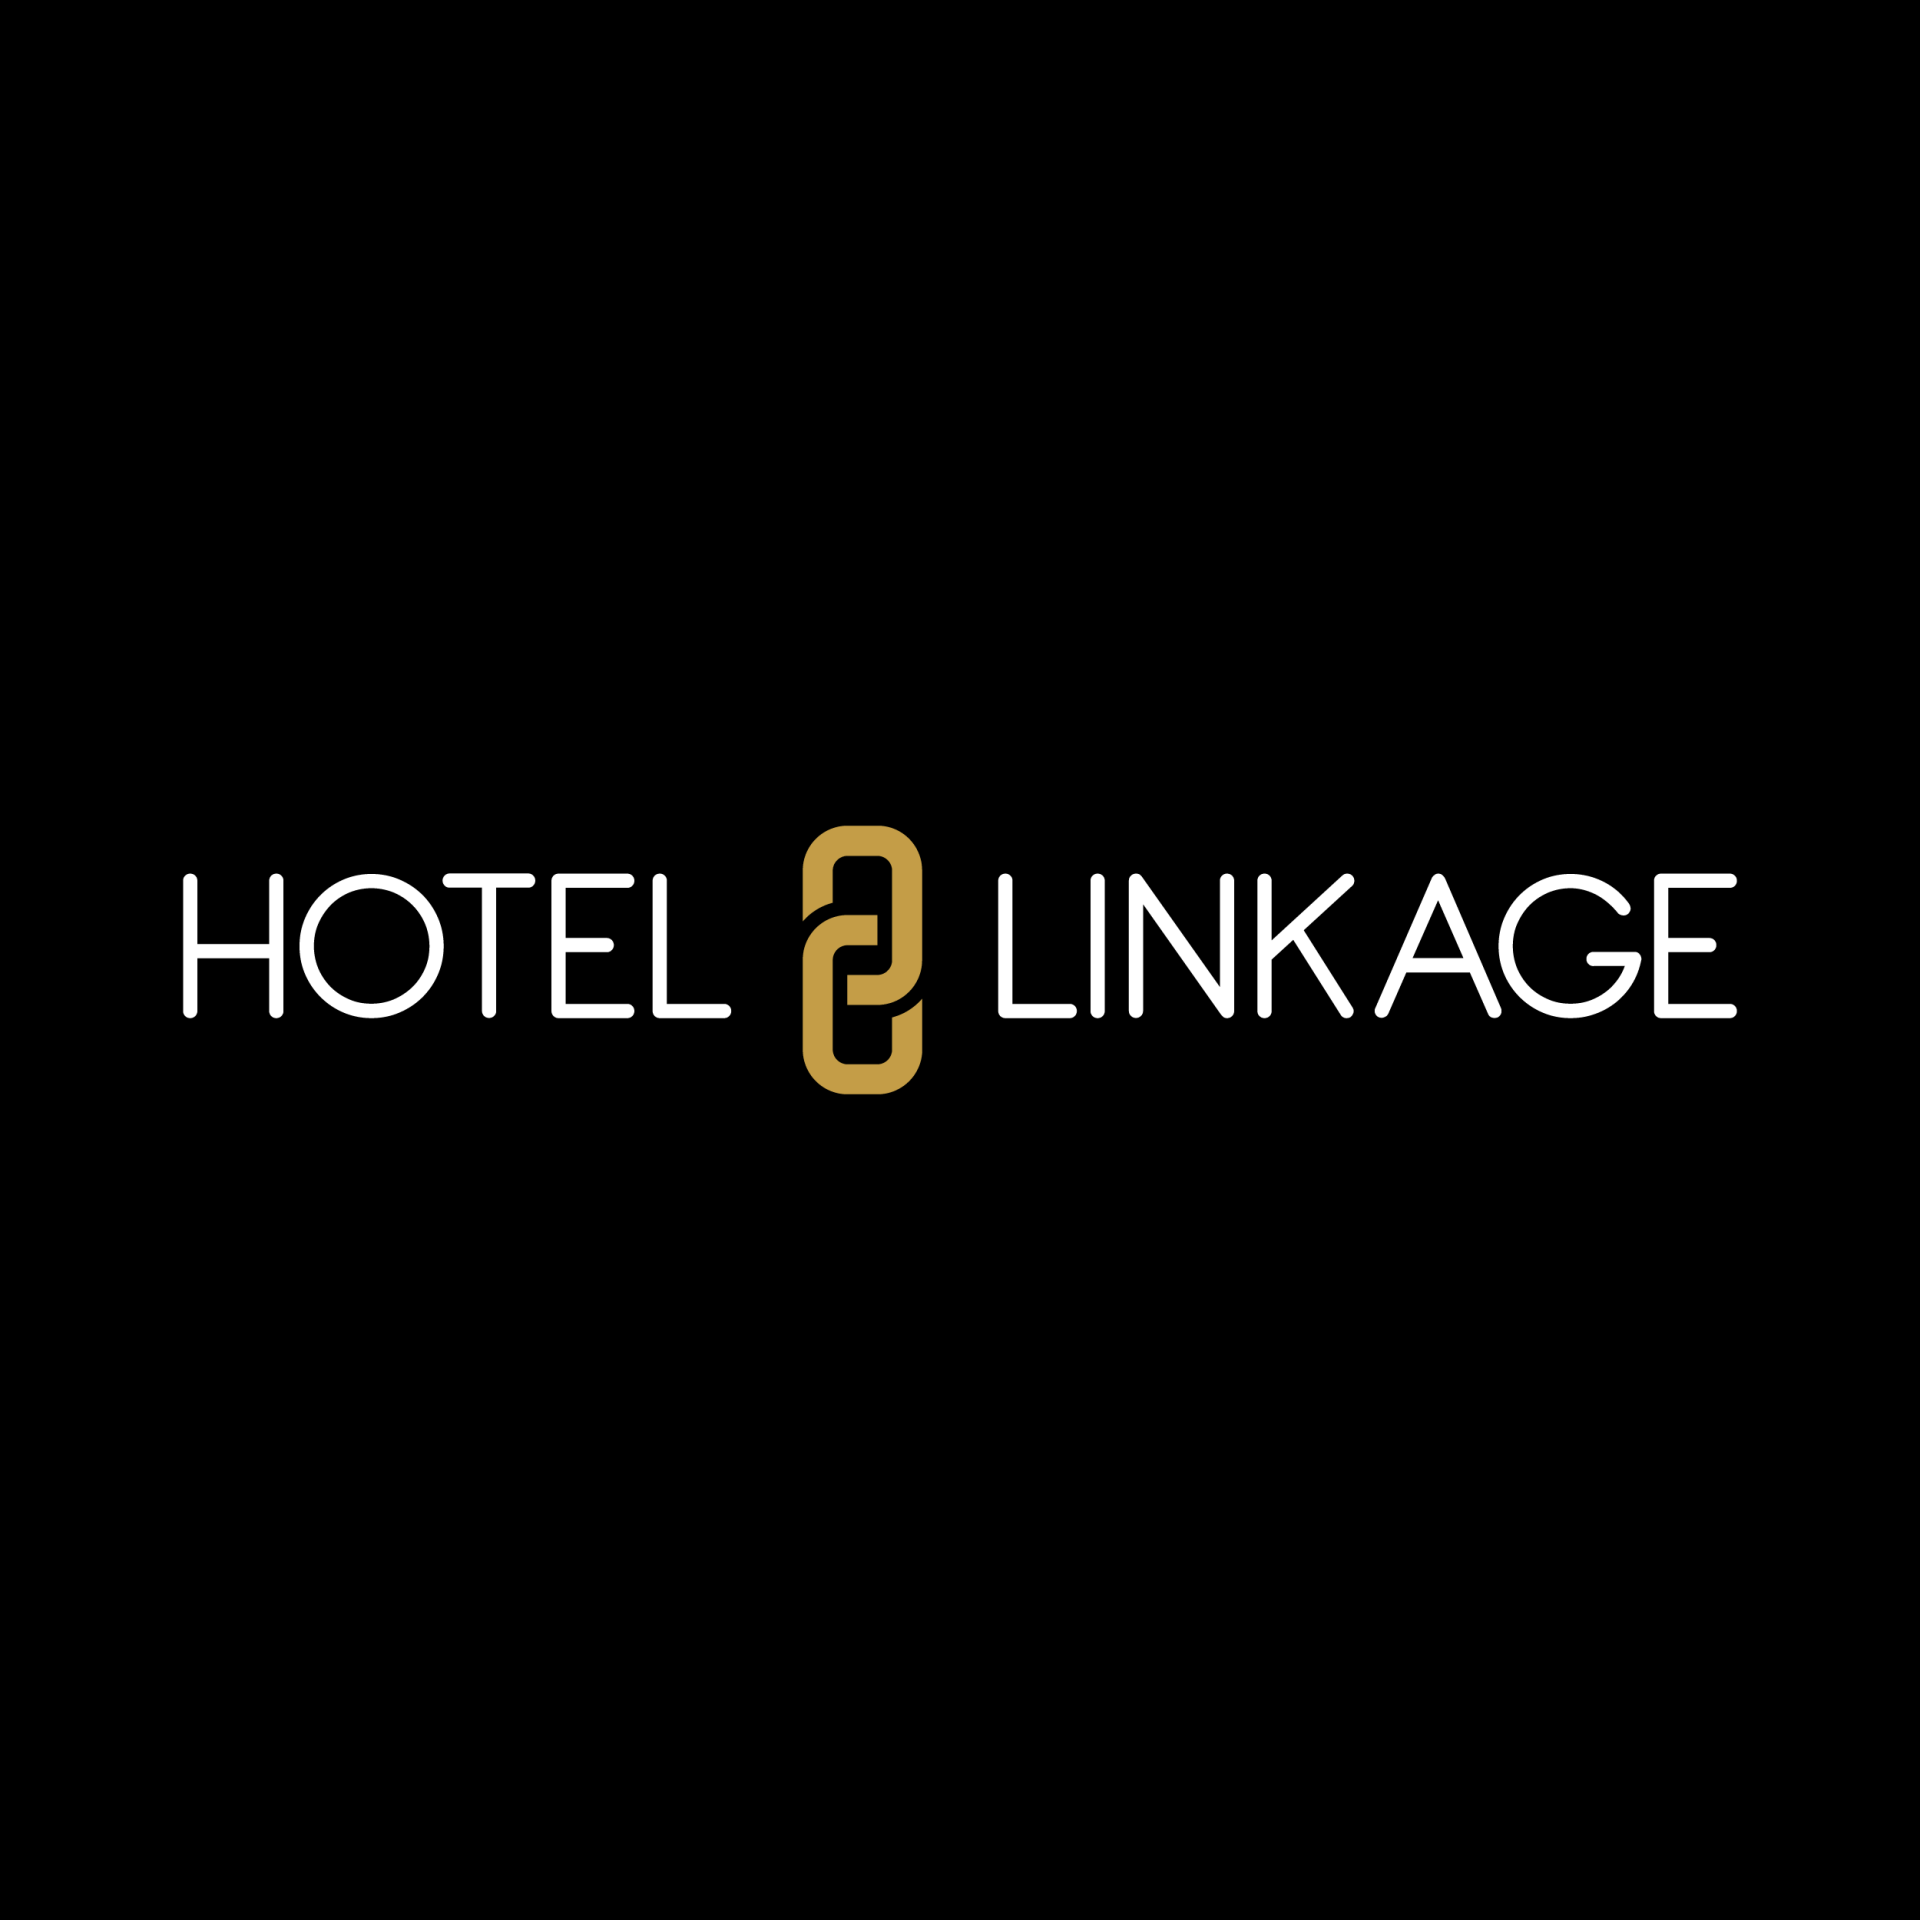 Hotel Linkage Webinar | 5 Sept | Travel Tech | Digital Marketing